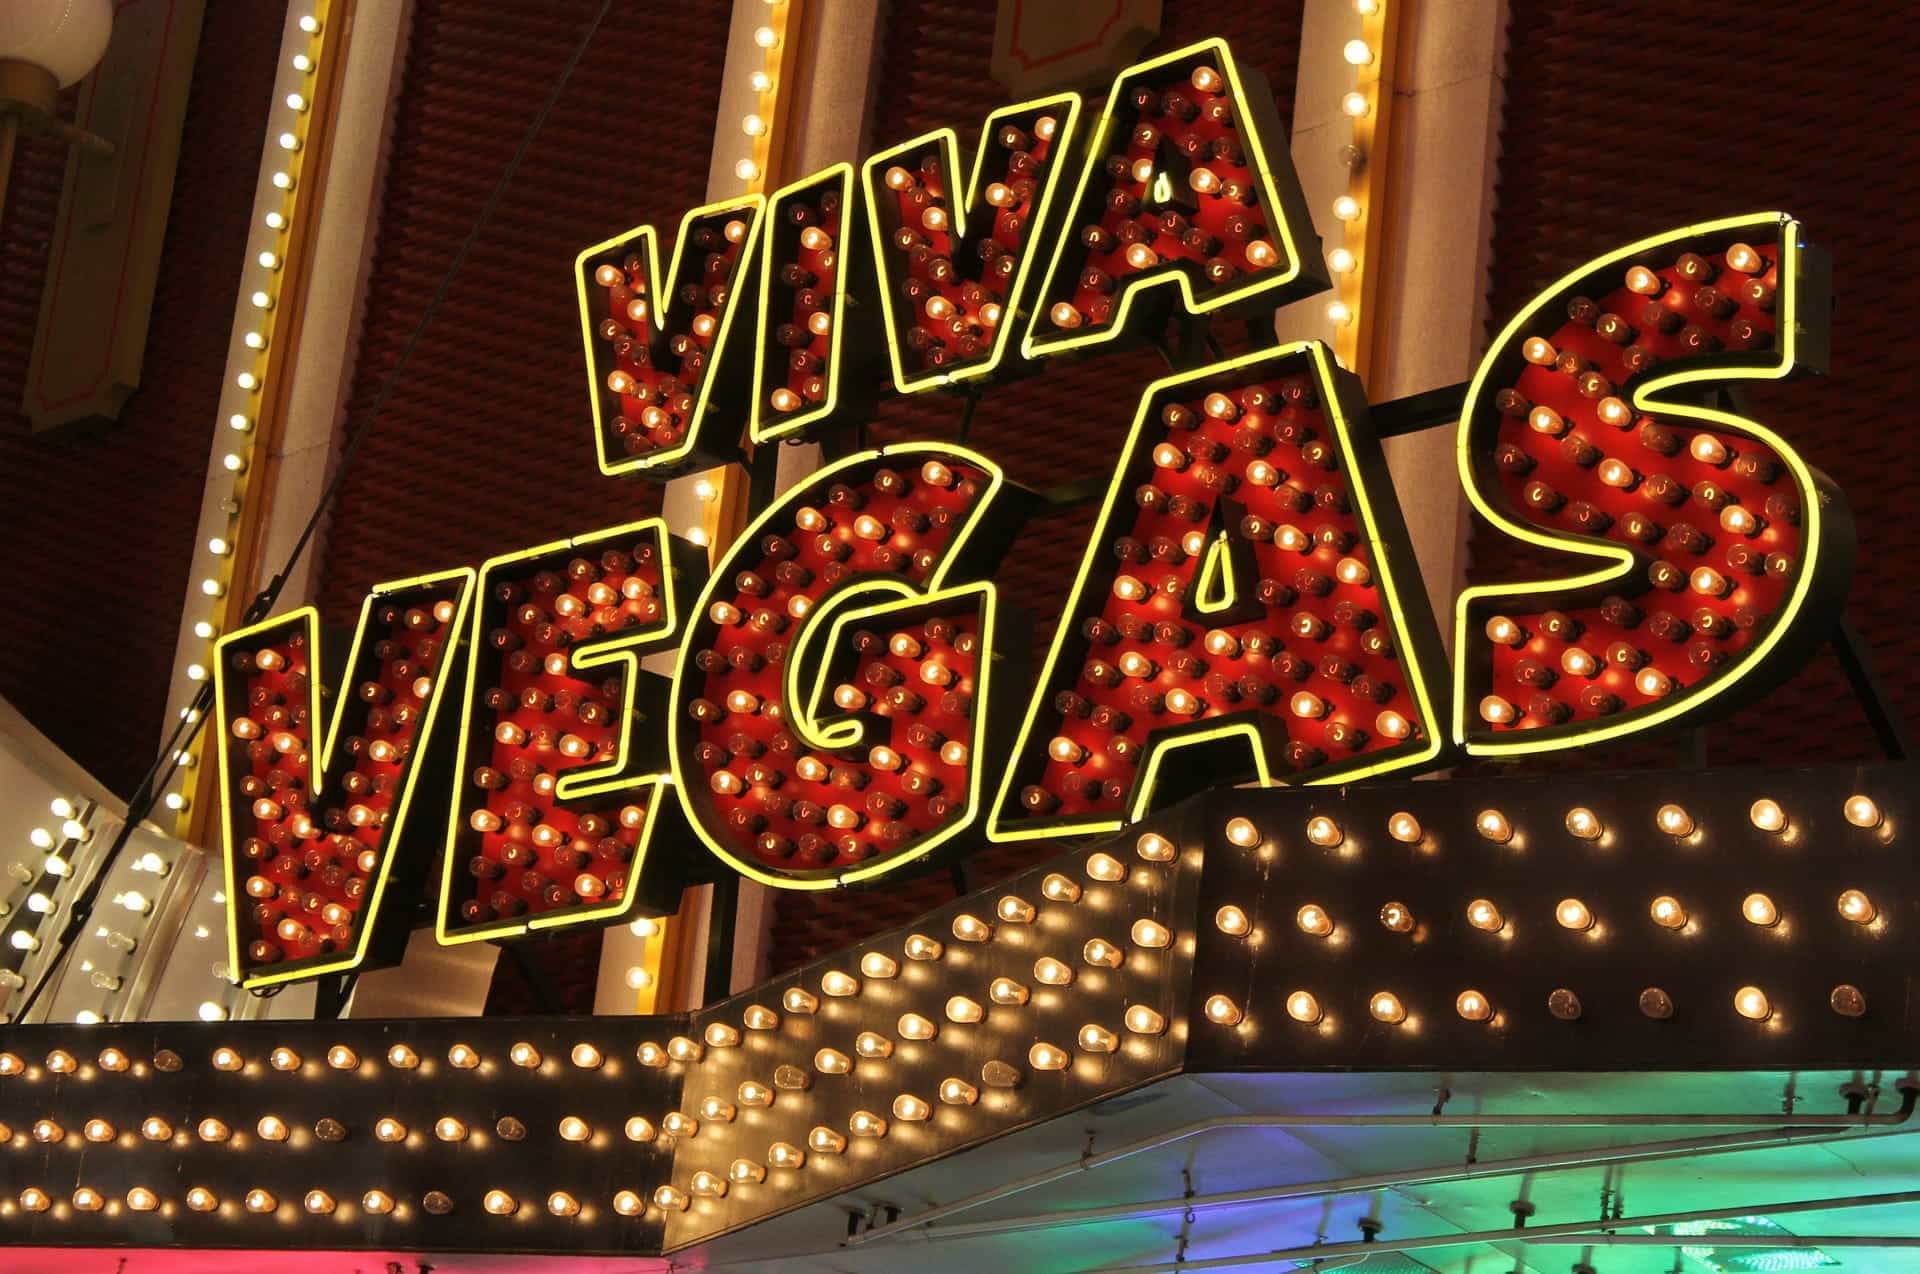 Florida-based casino operator Las Vegas Sands